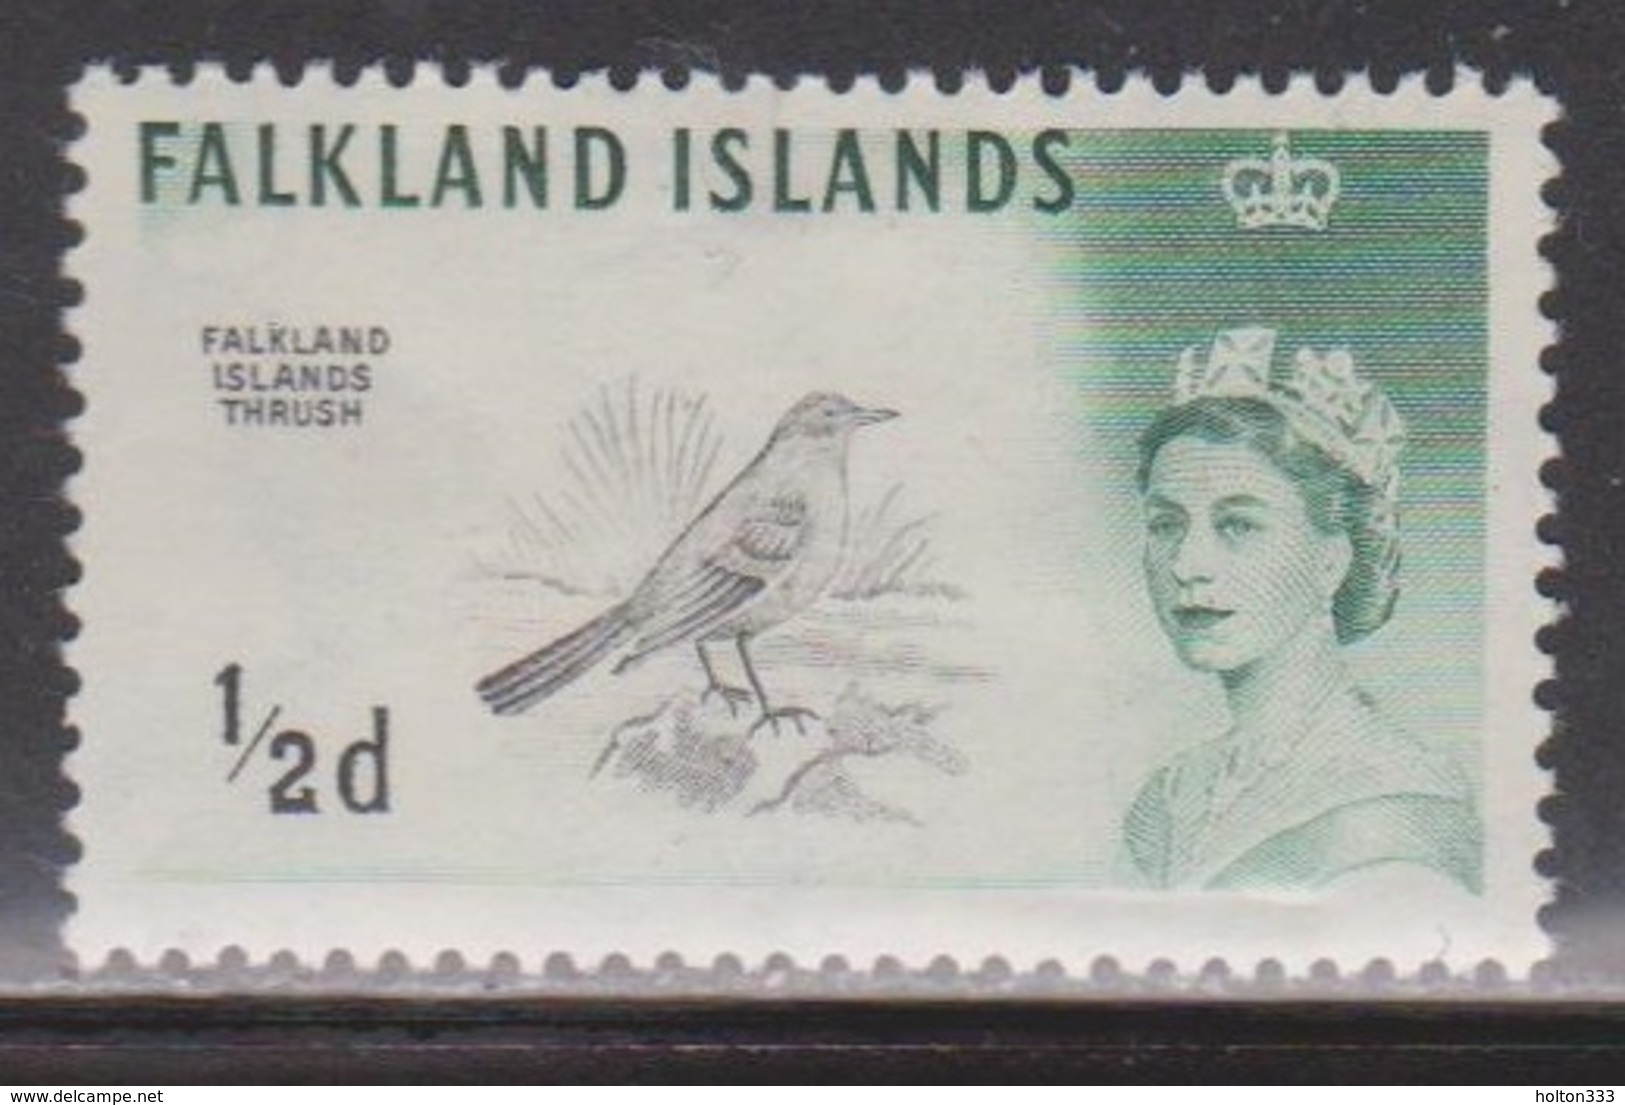 FALKLAND ISLANDS Scott # 128a MH - QEII & Falkland Islands Thrush - Bird - Falkland Islands